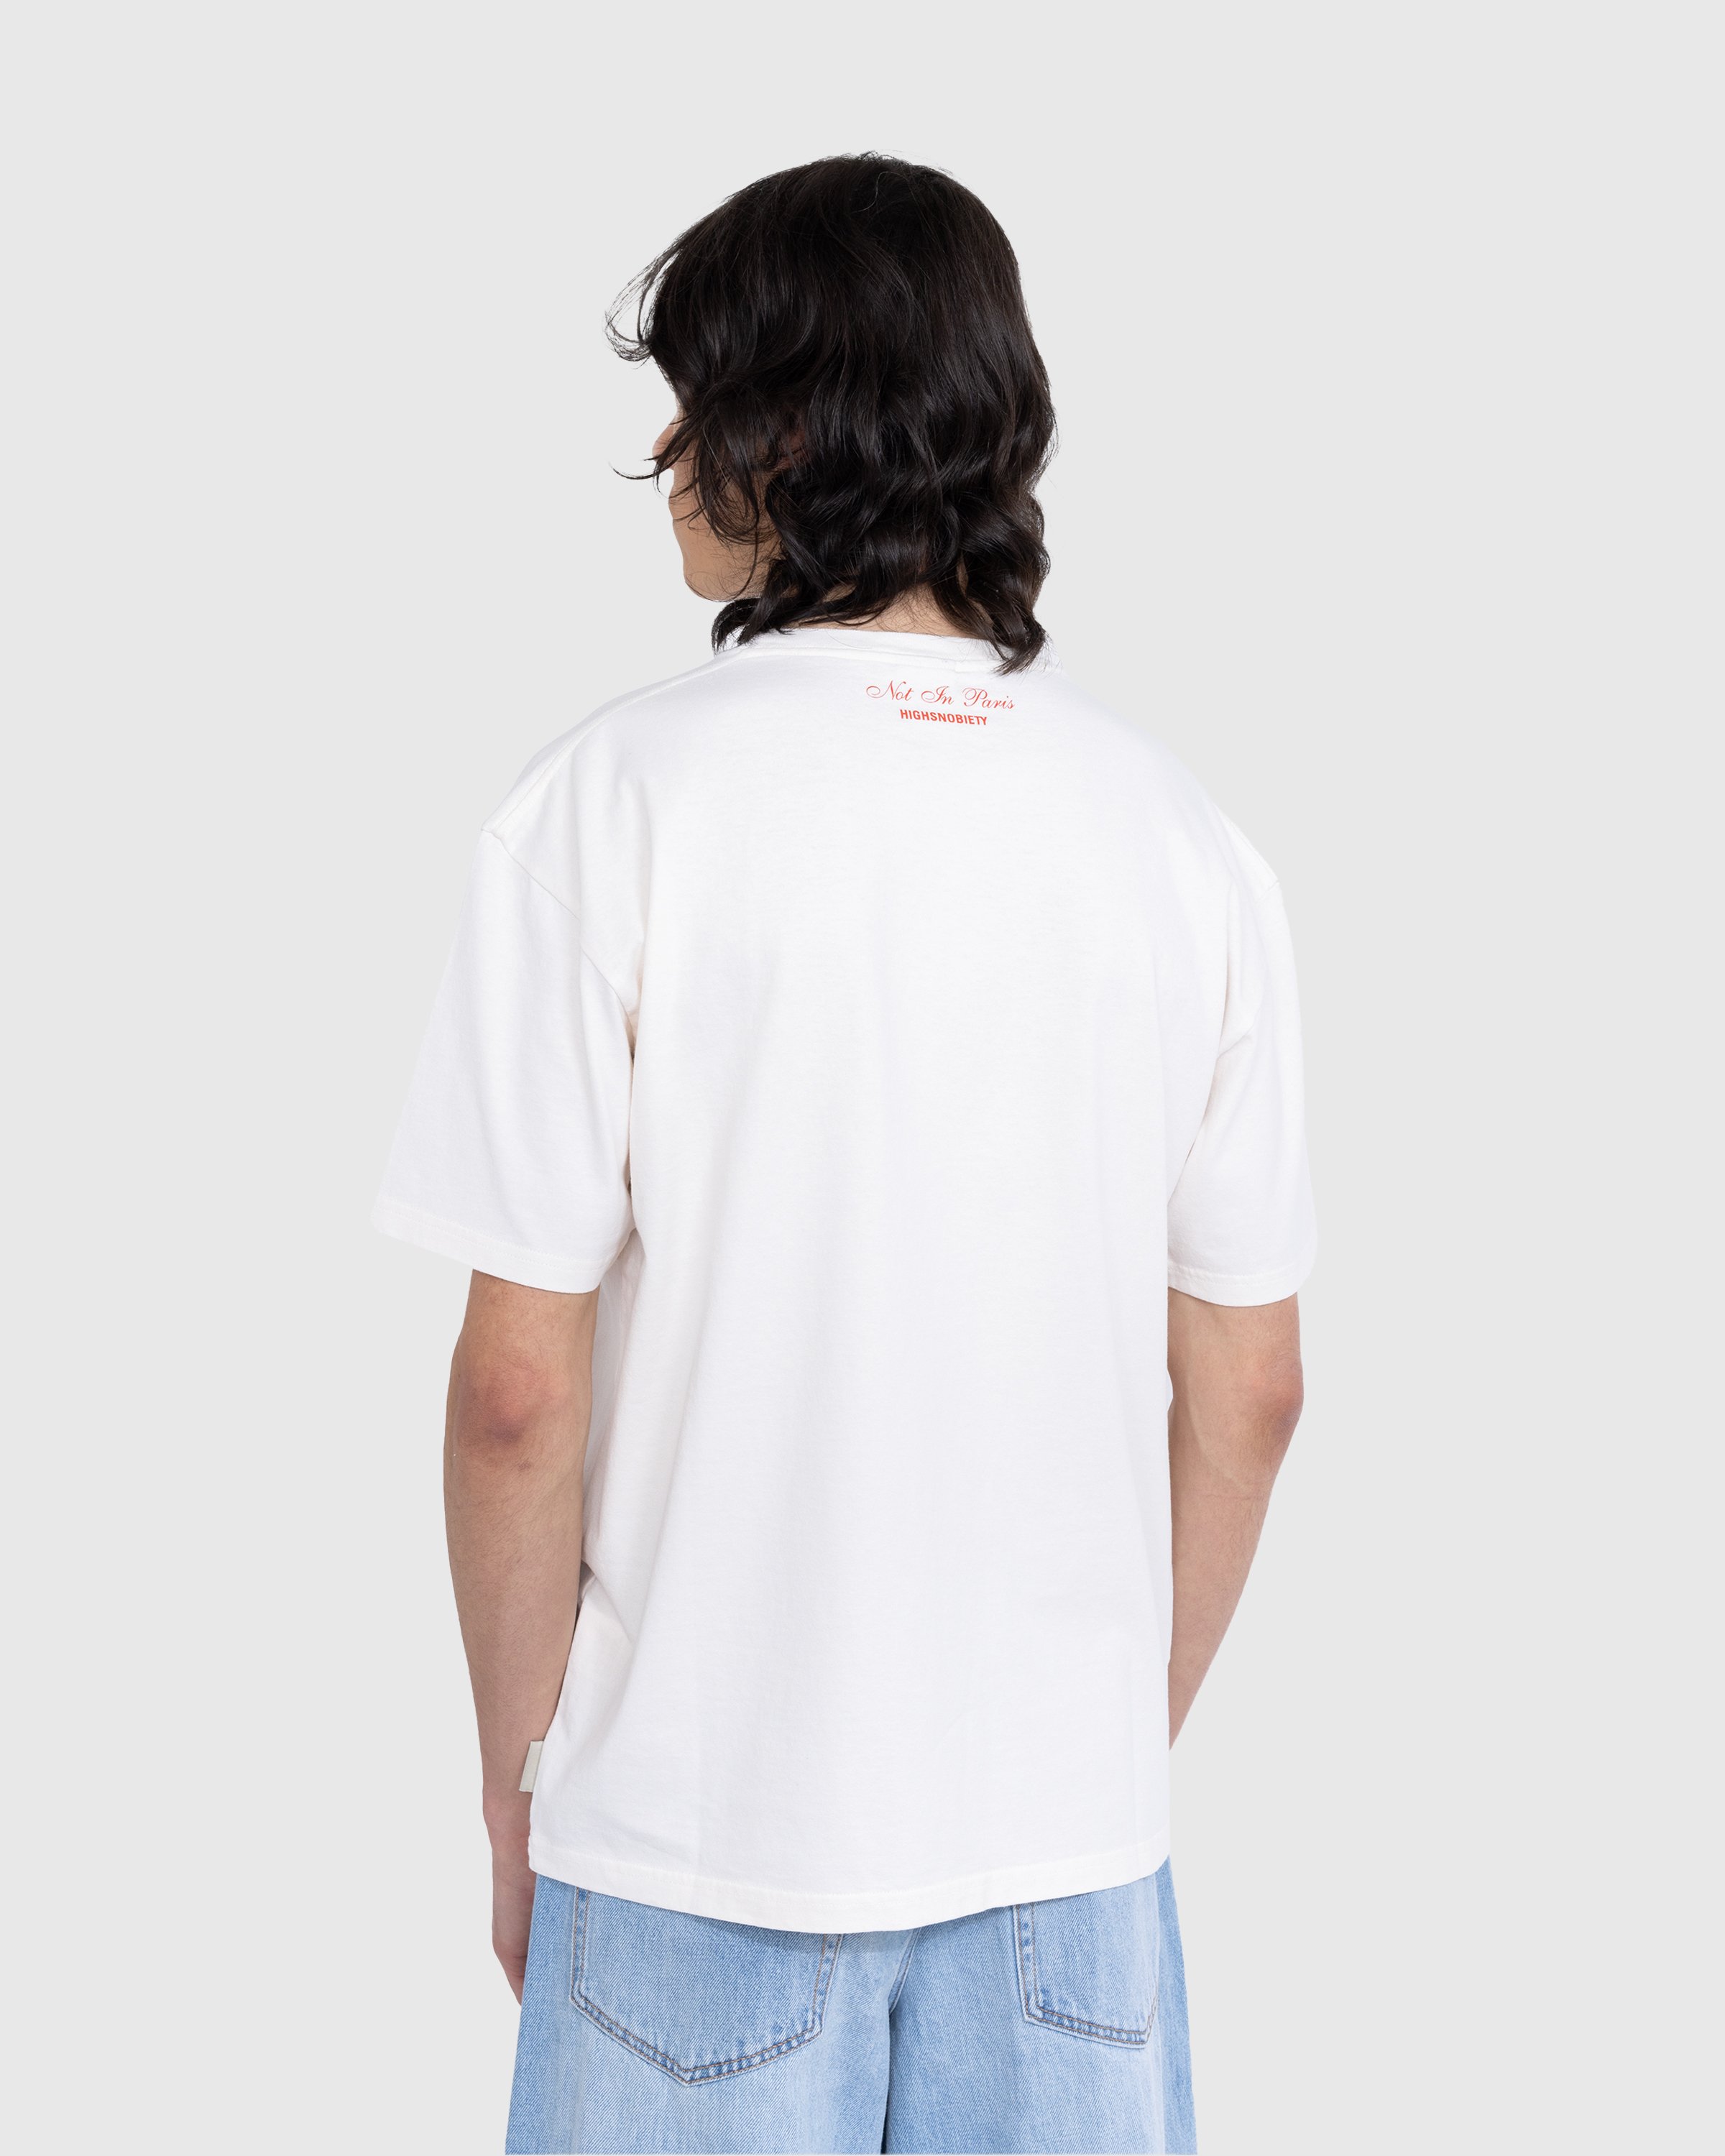 Highsnobiety - Not in Paris 5 T-Shirt White - Clothing - White - Image 3